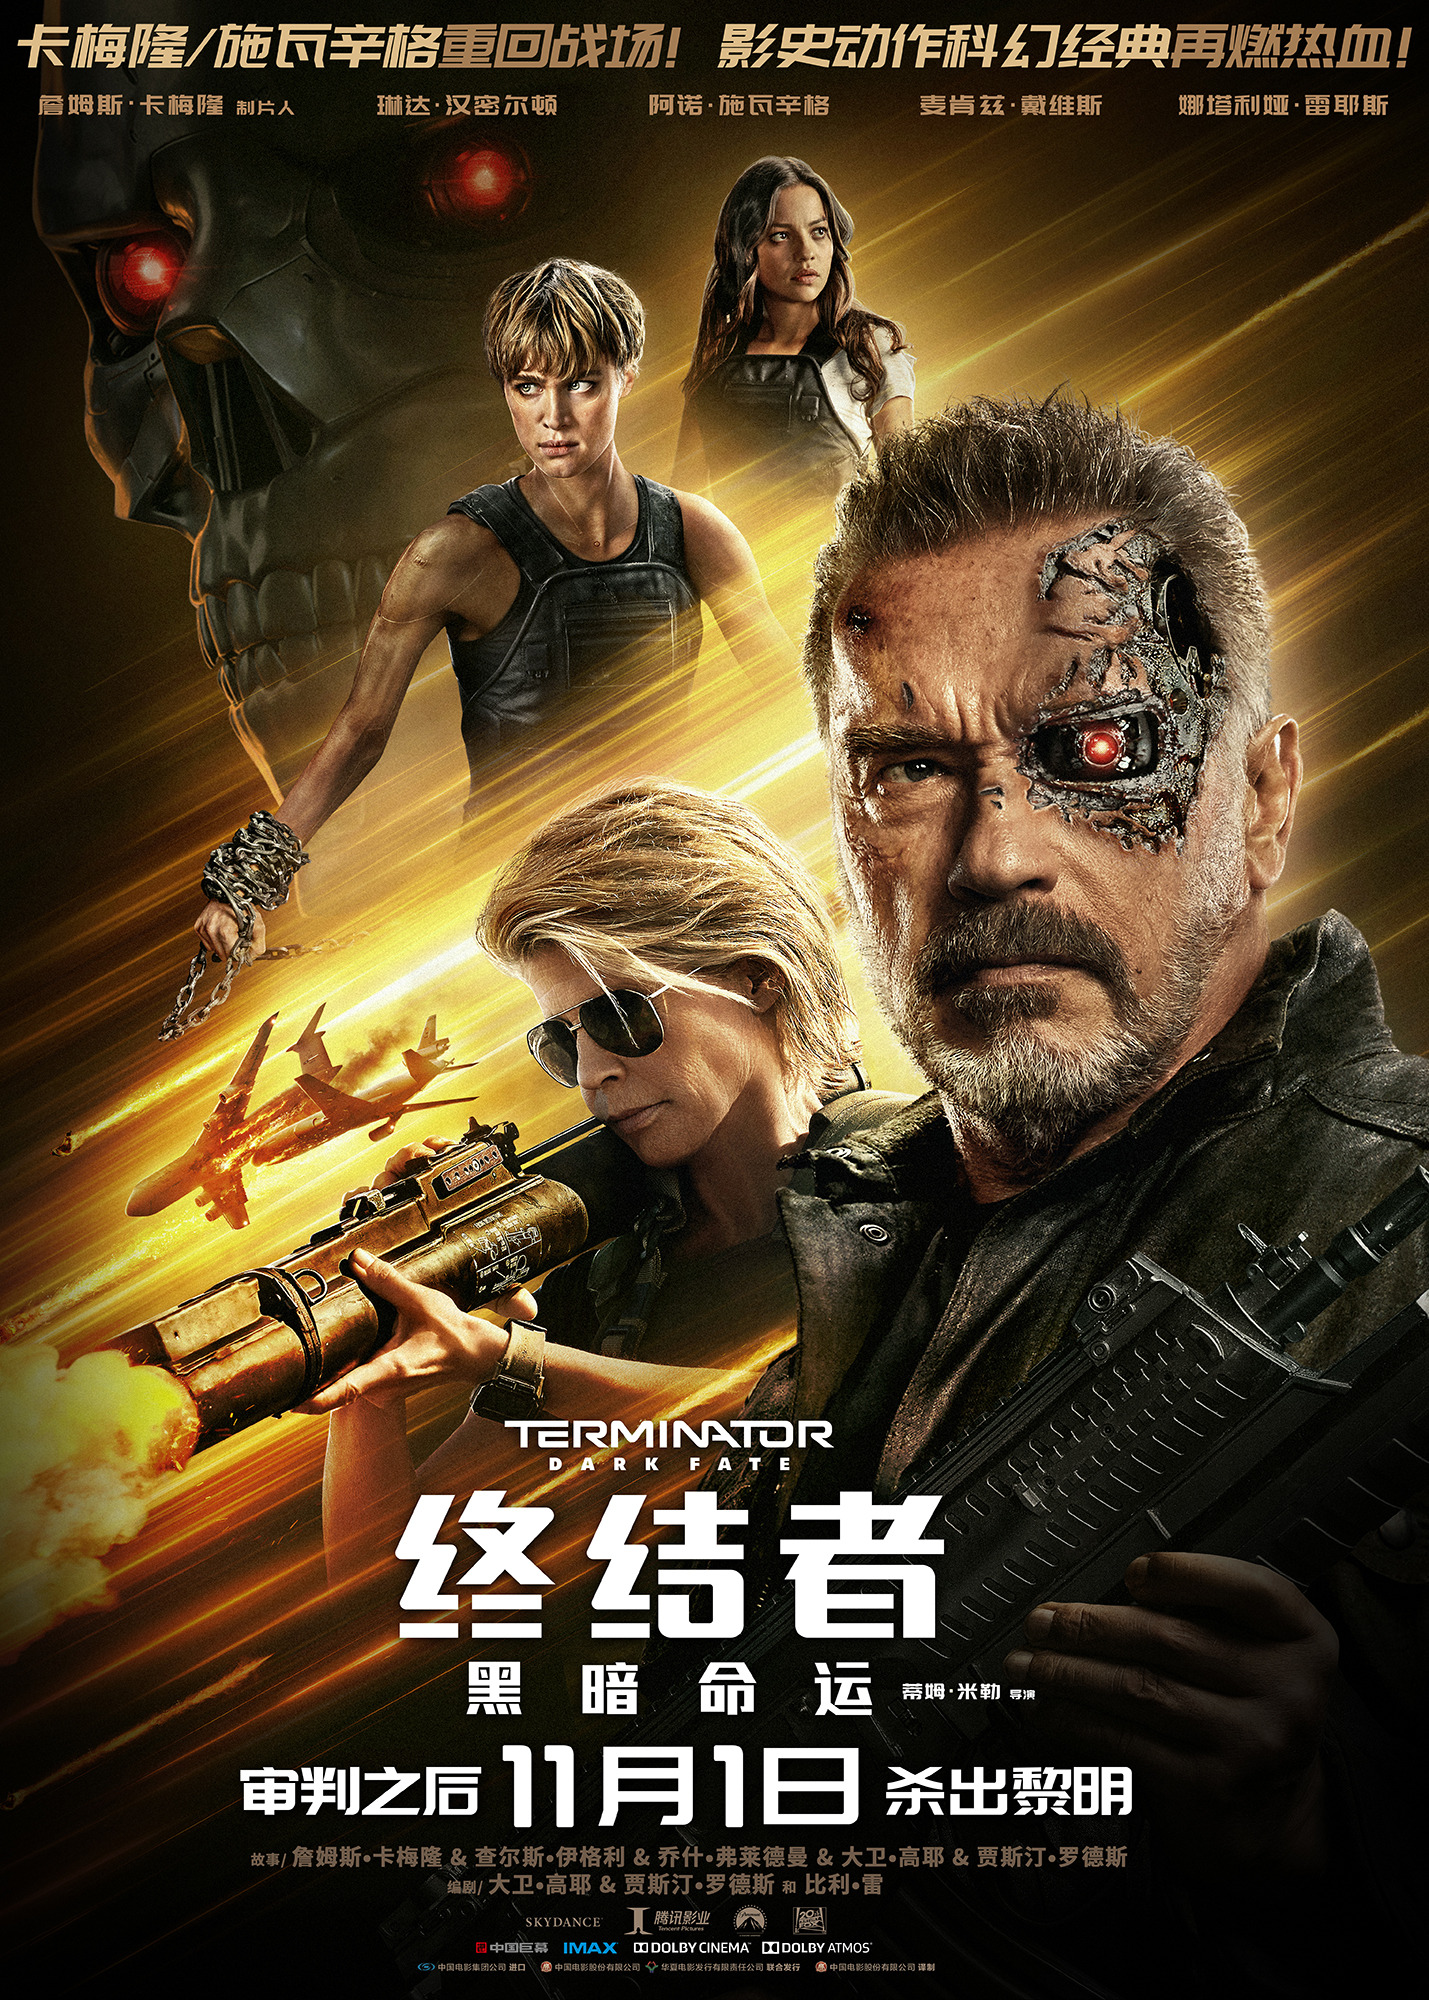 Mega Sized Movie Poster Image for Terminator: Dark Fate (#12 of 15)